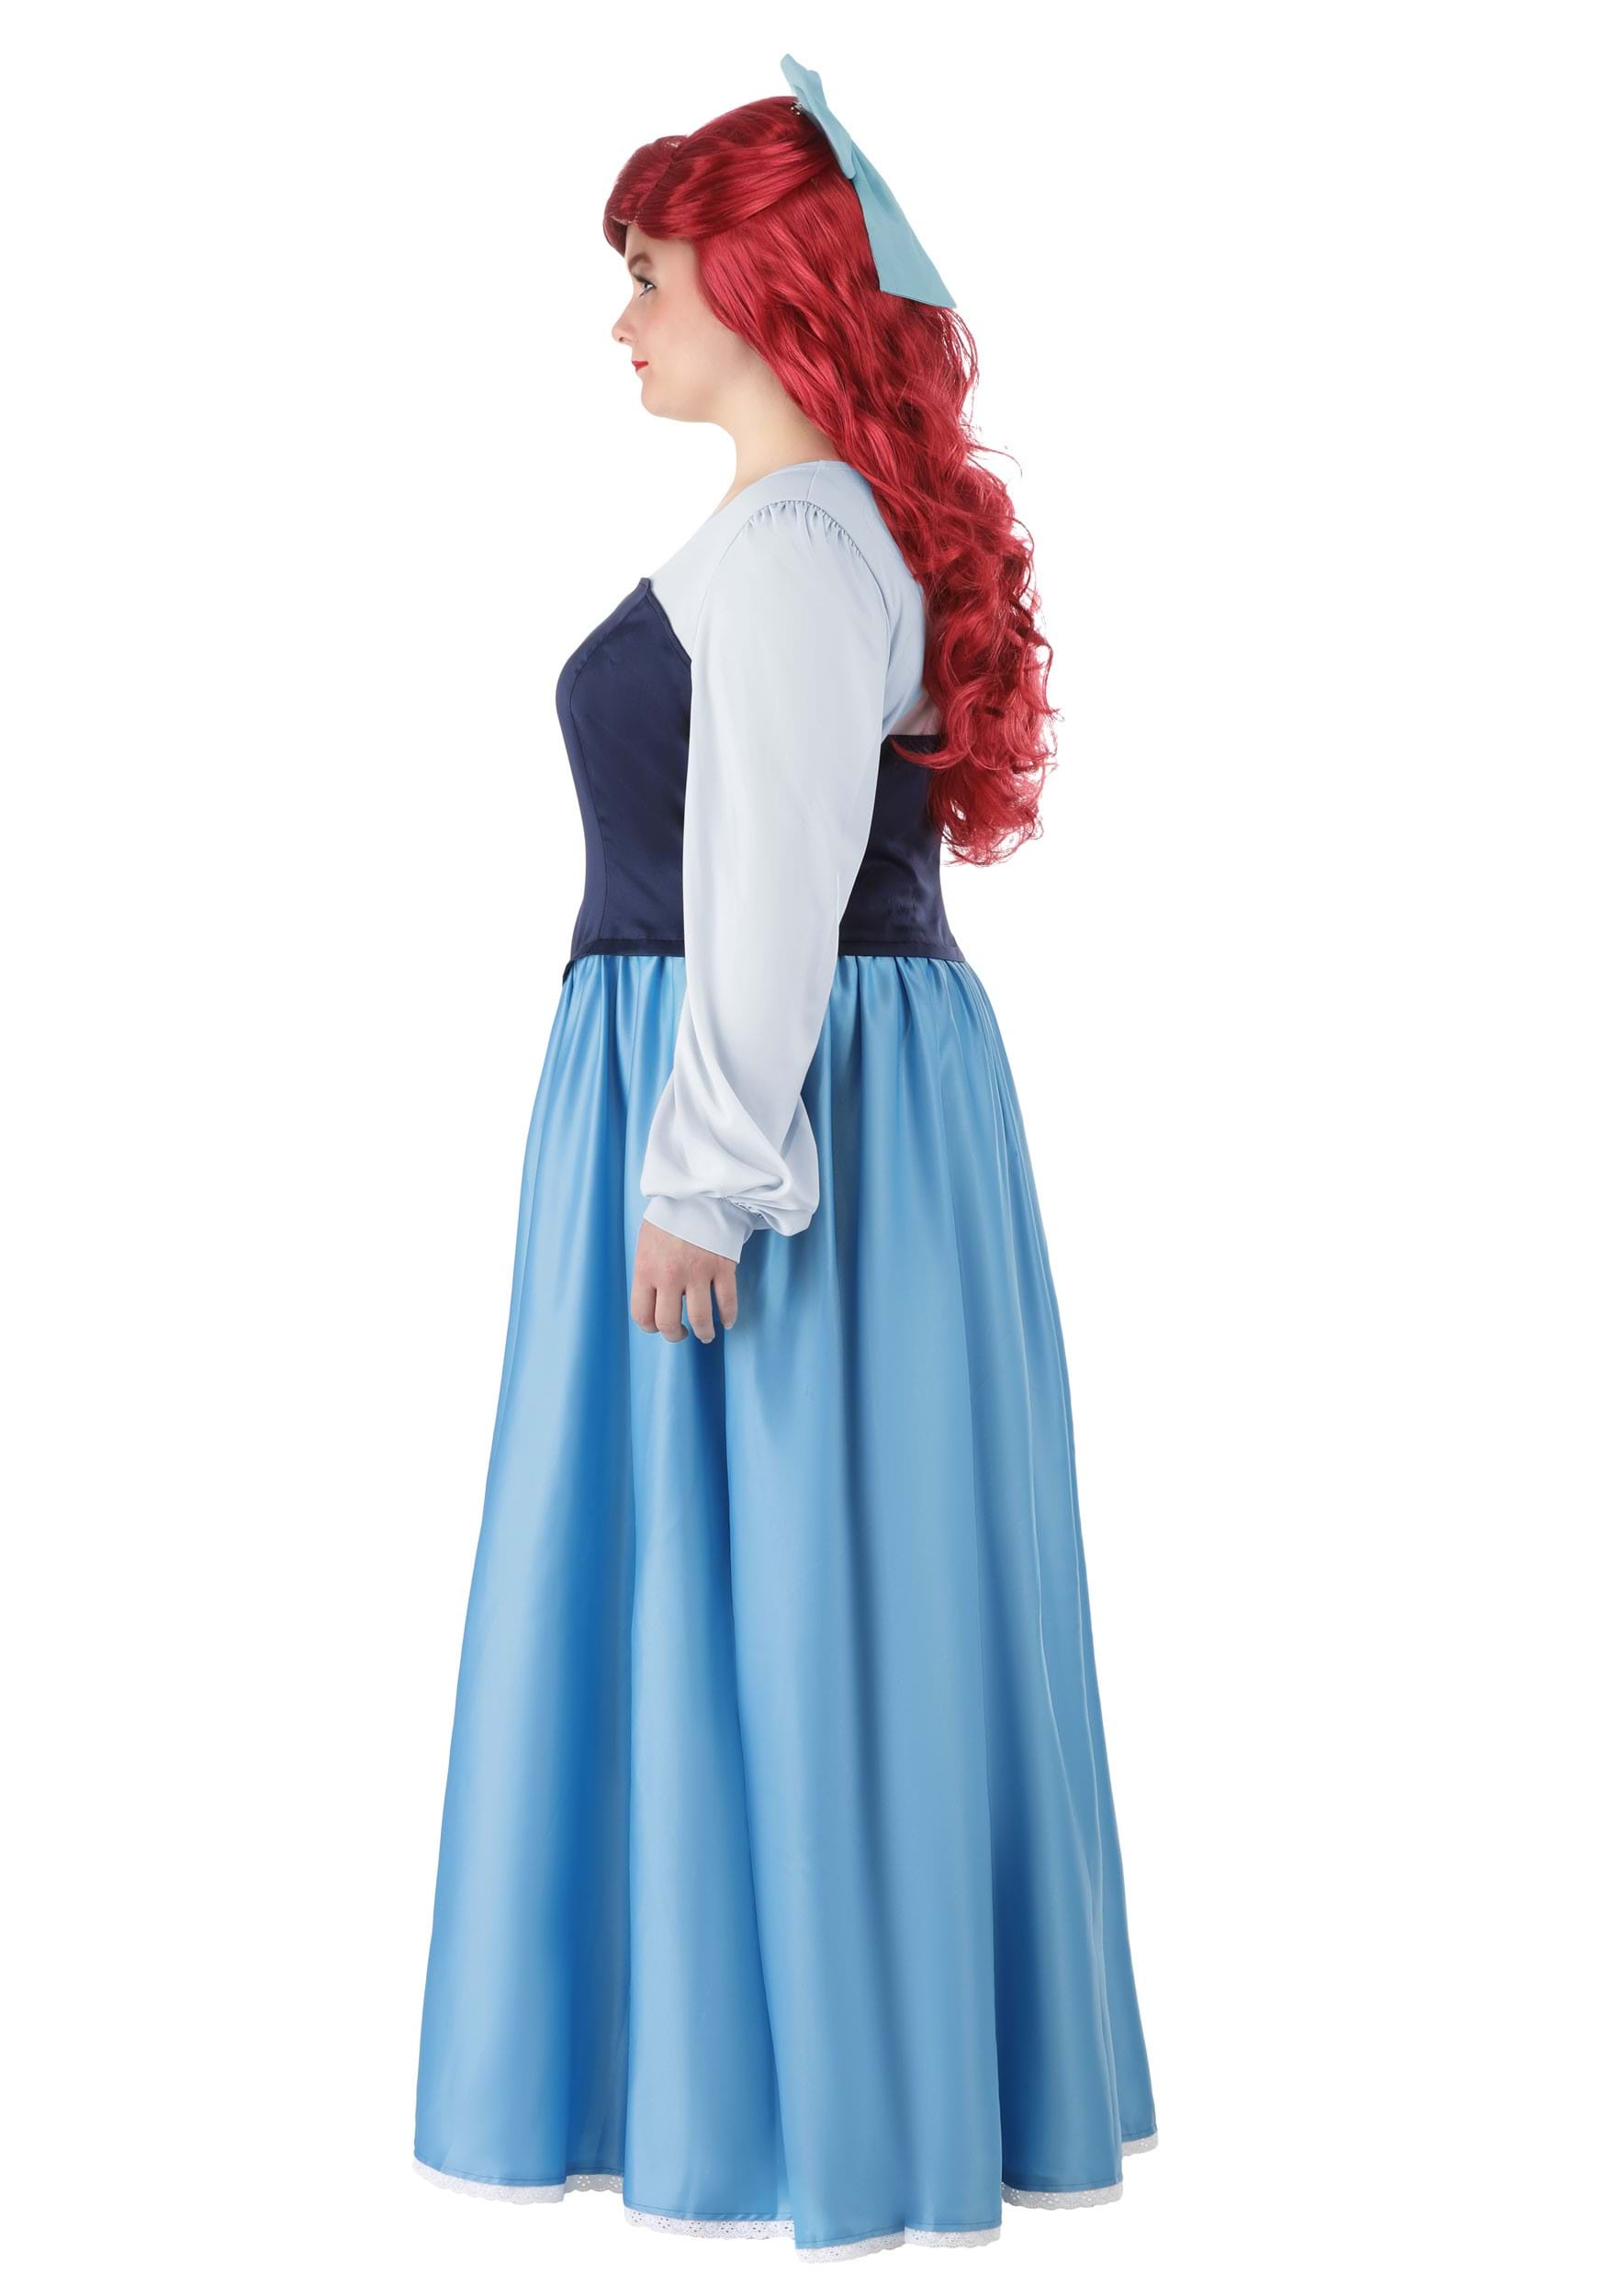 Plus Size Women's The Little Mermaid Ariel Blue Dress Costume